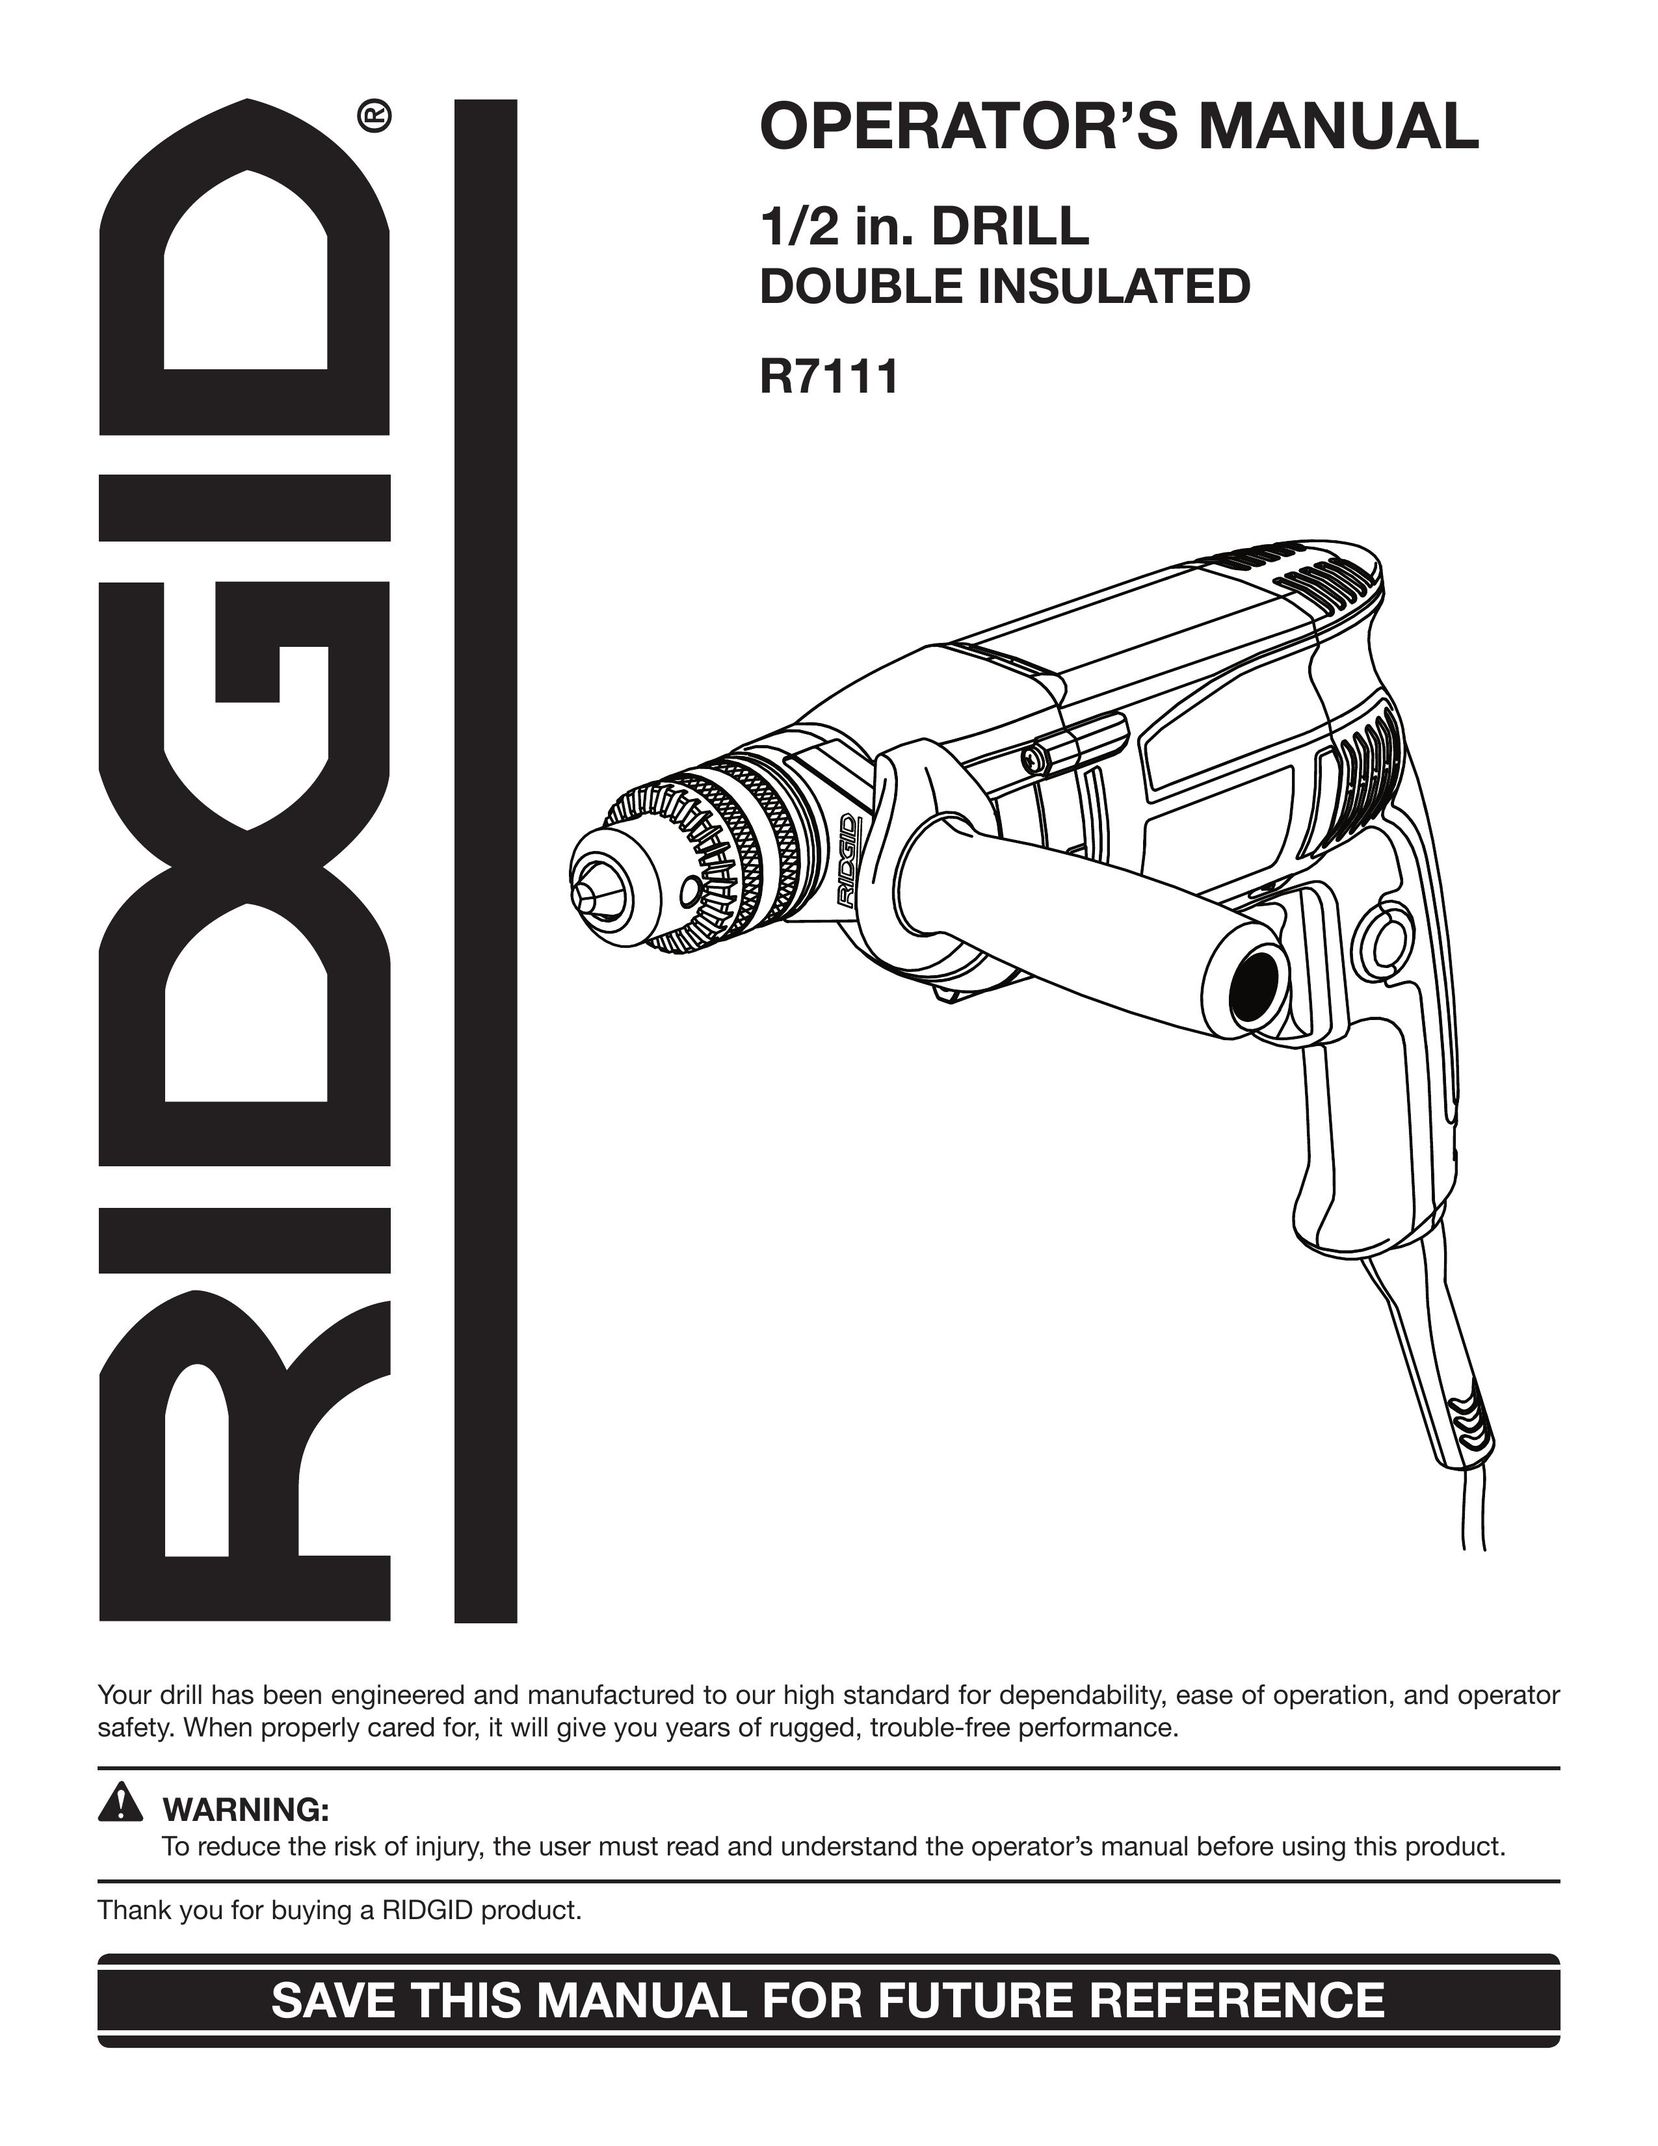 RIDGID R7111 Drill User Manual